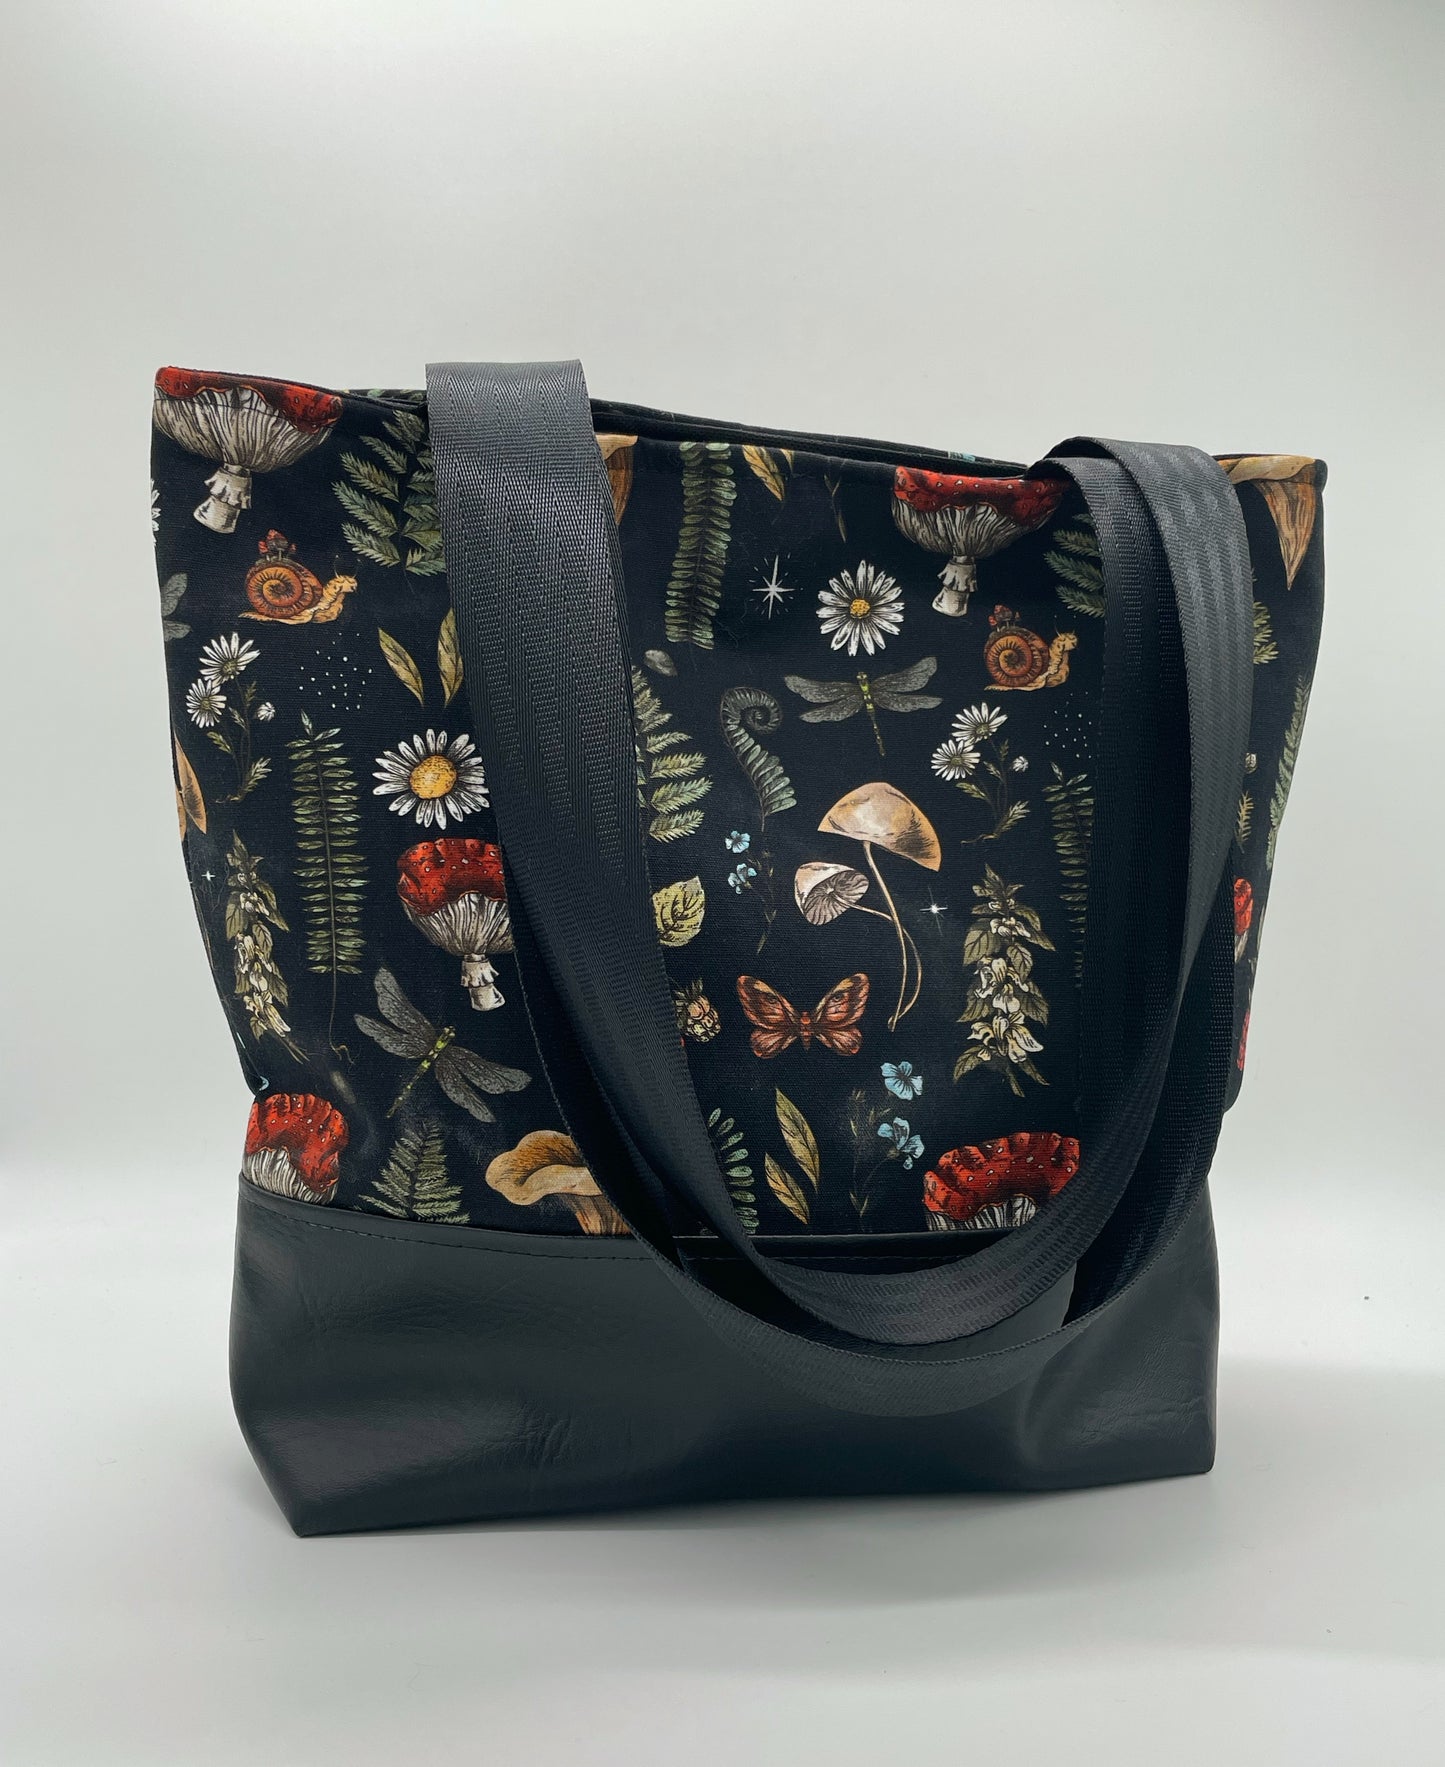 Forest Mushrooms Canvas with Black Vinyl Tote - Shoulder Bag - Purse